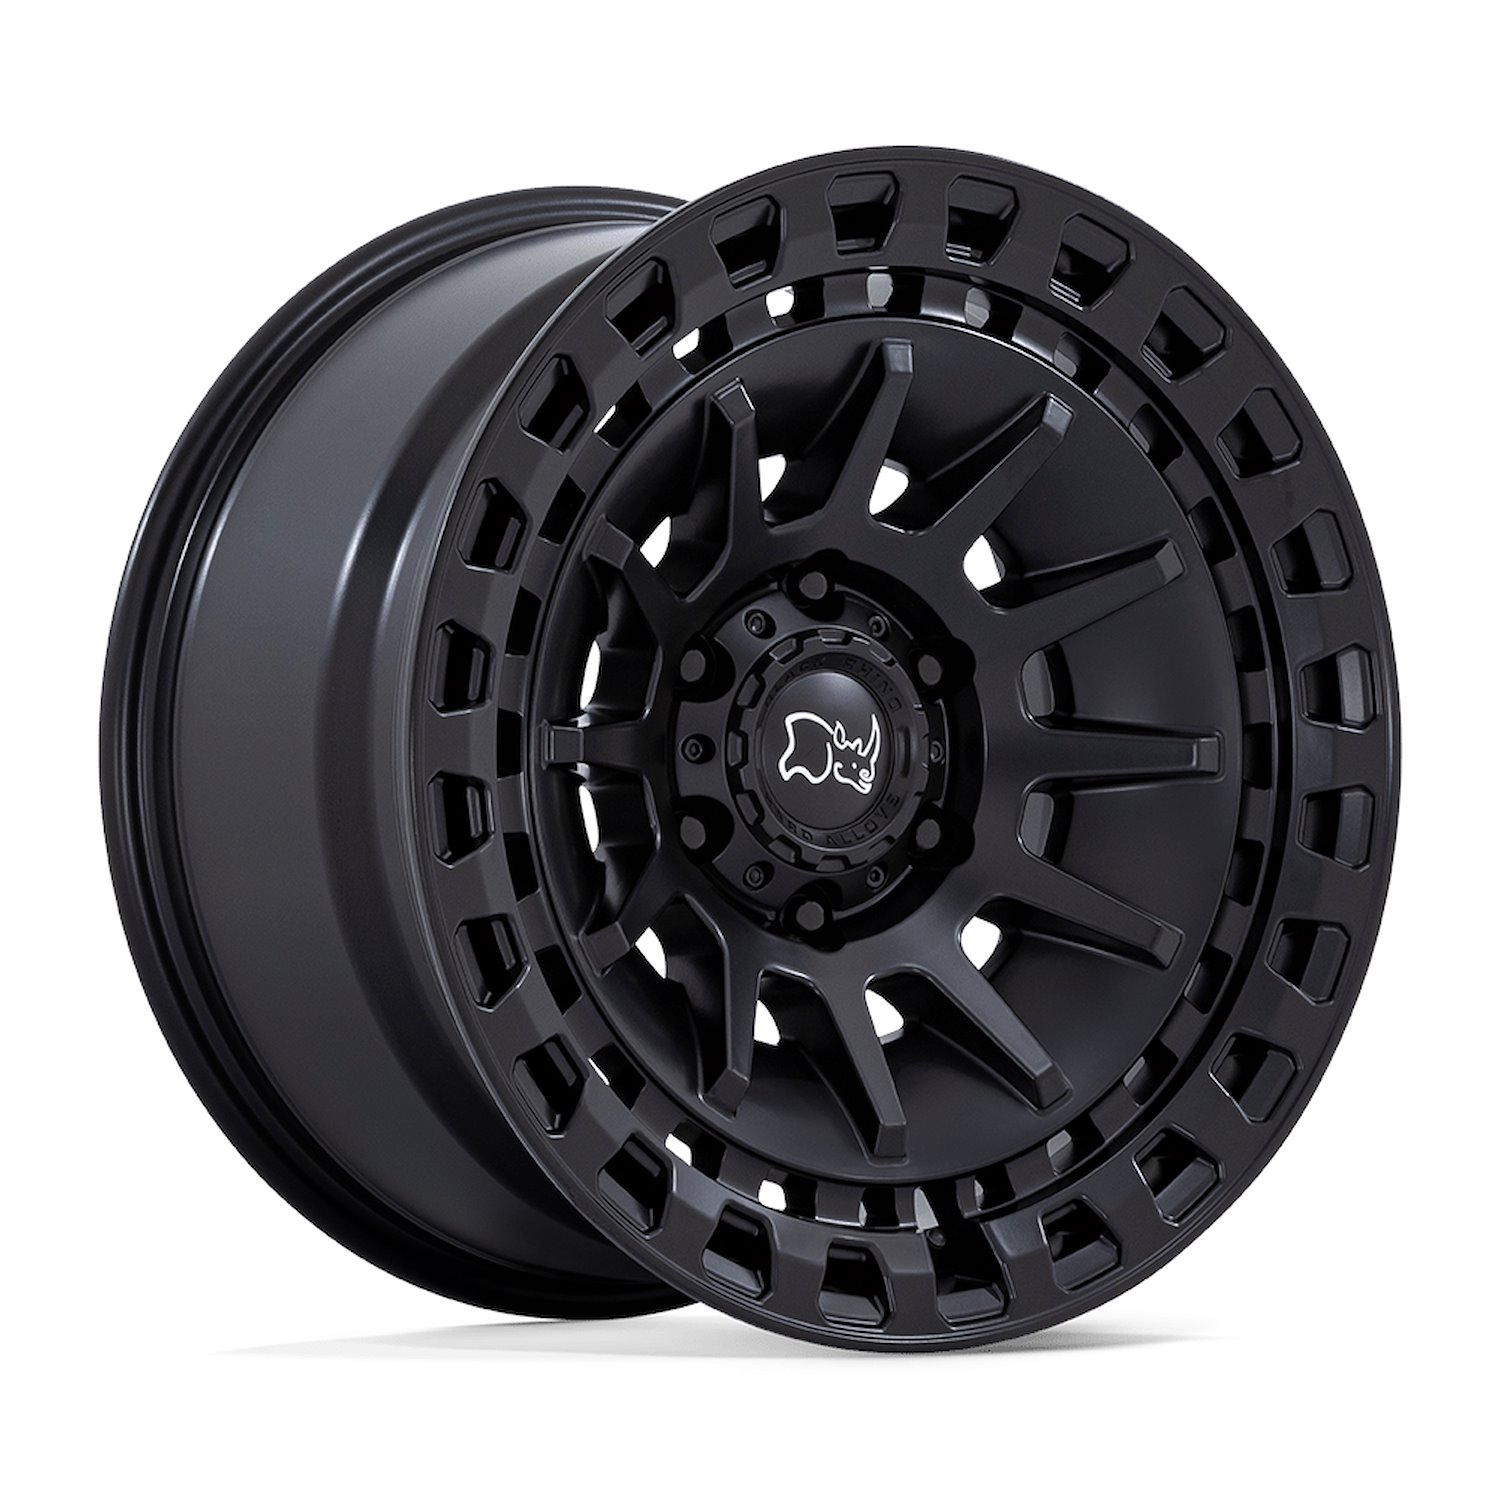 BR009MX18906300 BARRAGE Wheel [Size: 18" x 9"] Matte Black